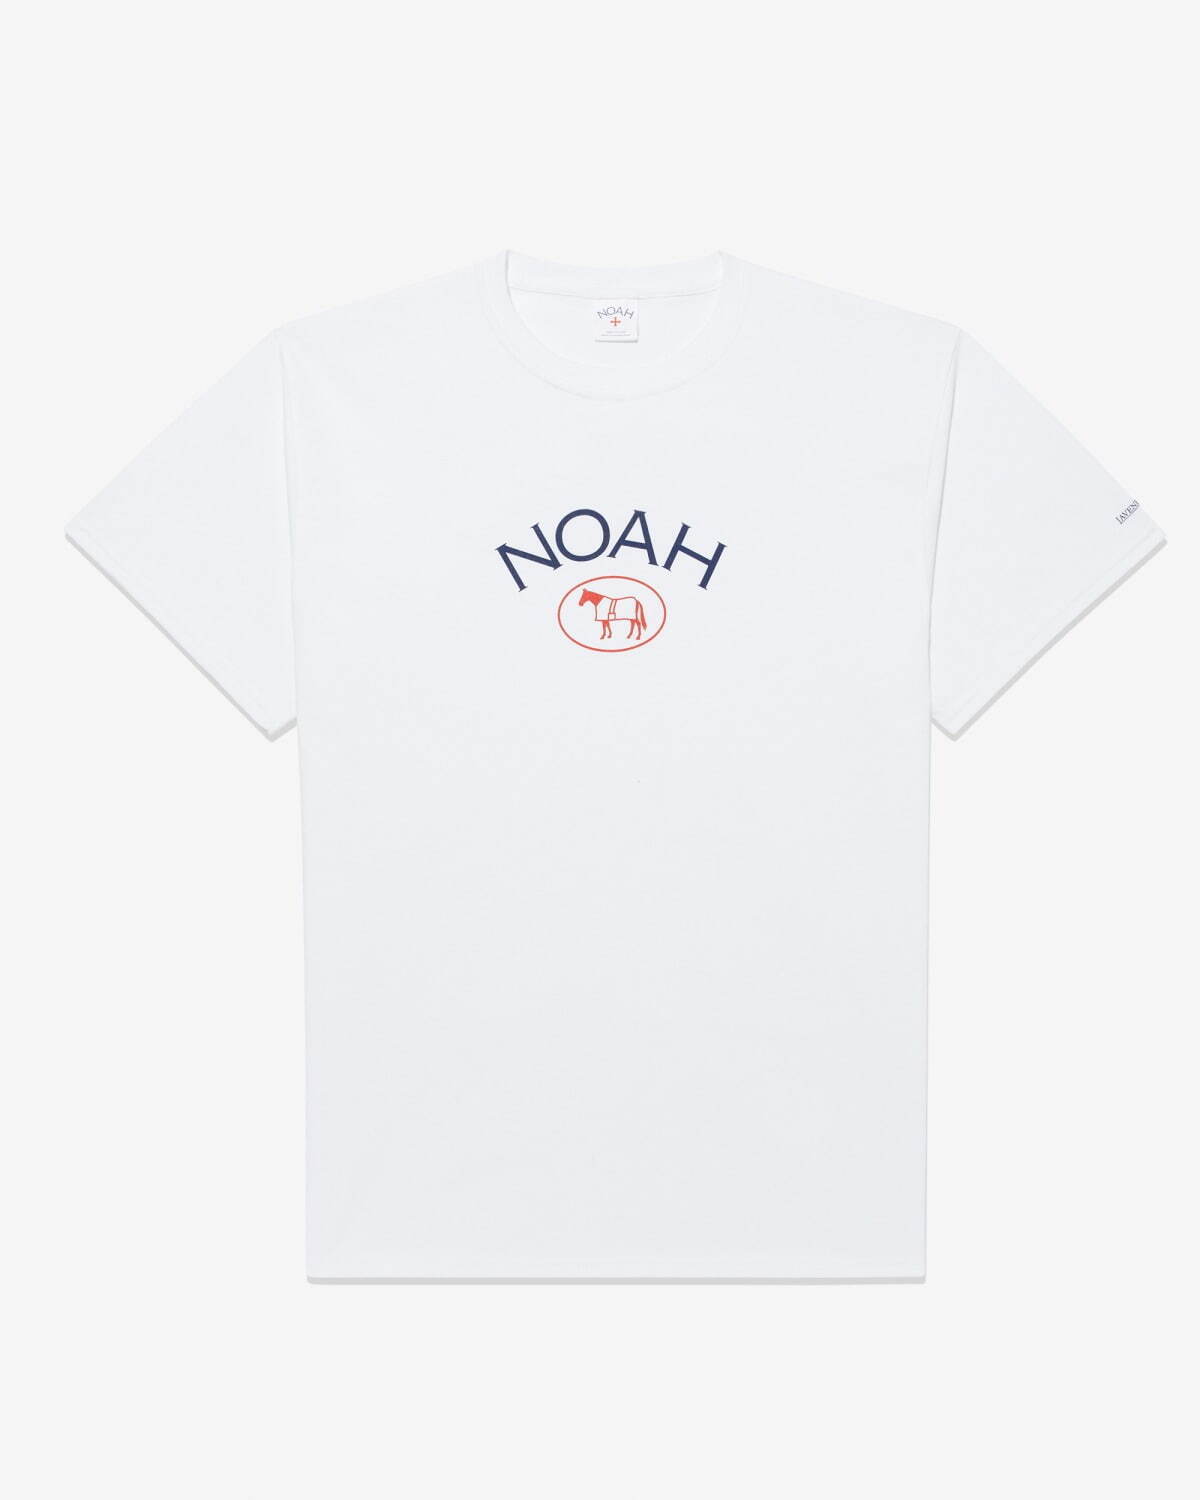 Noah x Lavenham Logo Tee 8,250円